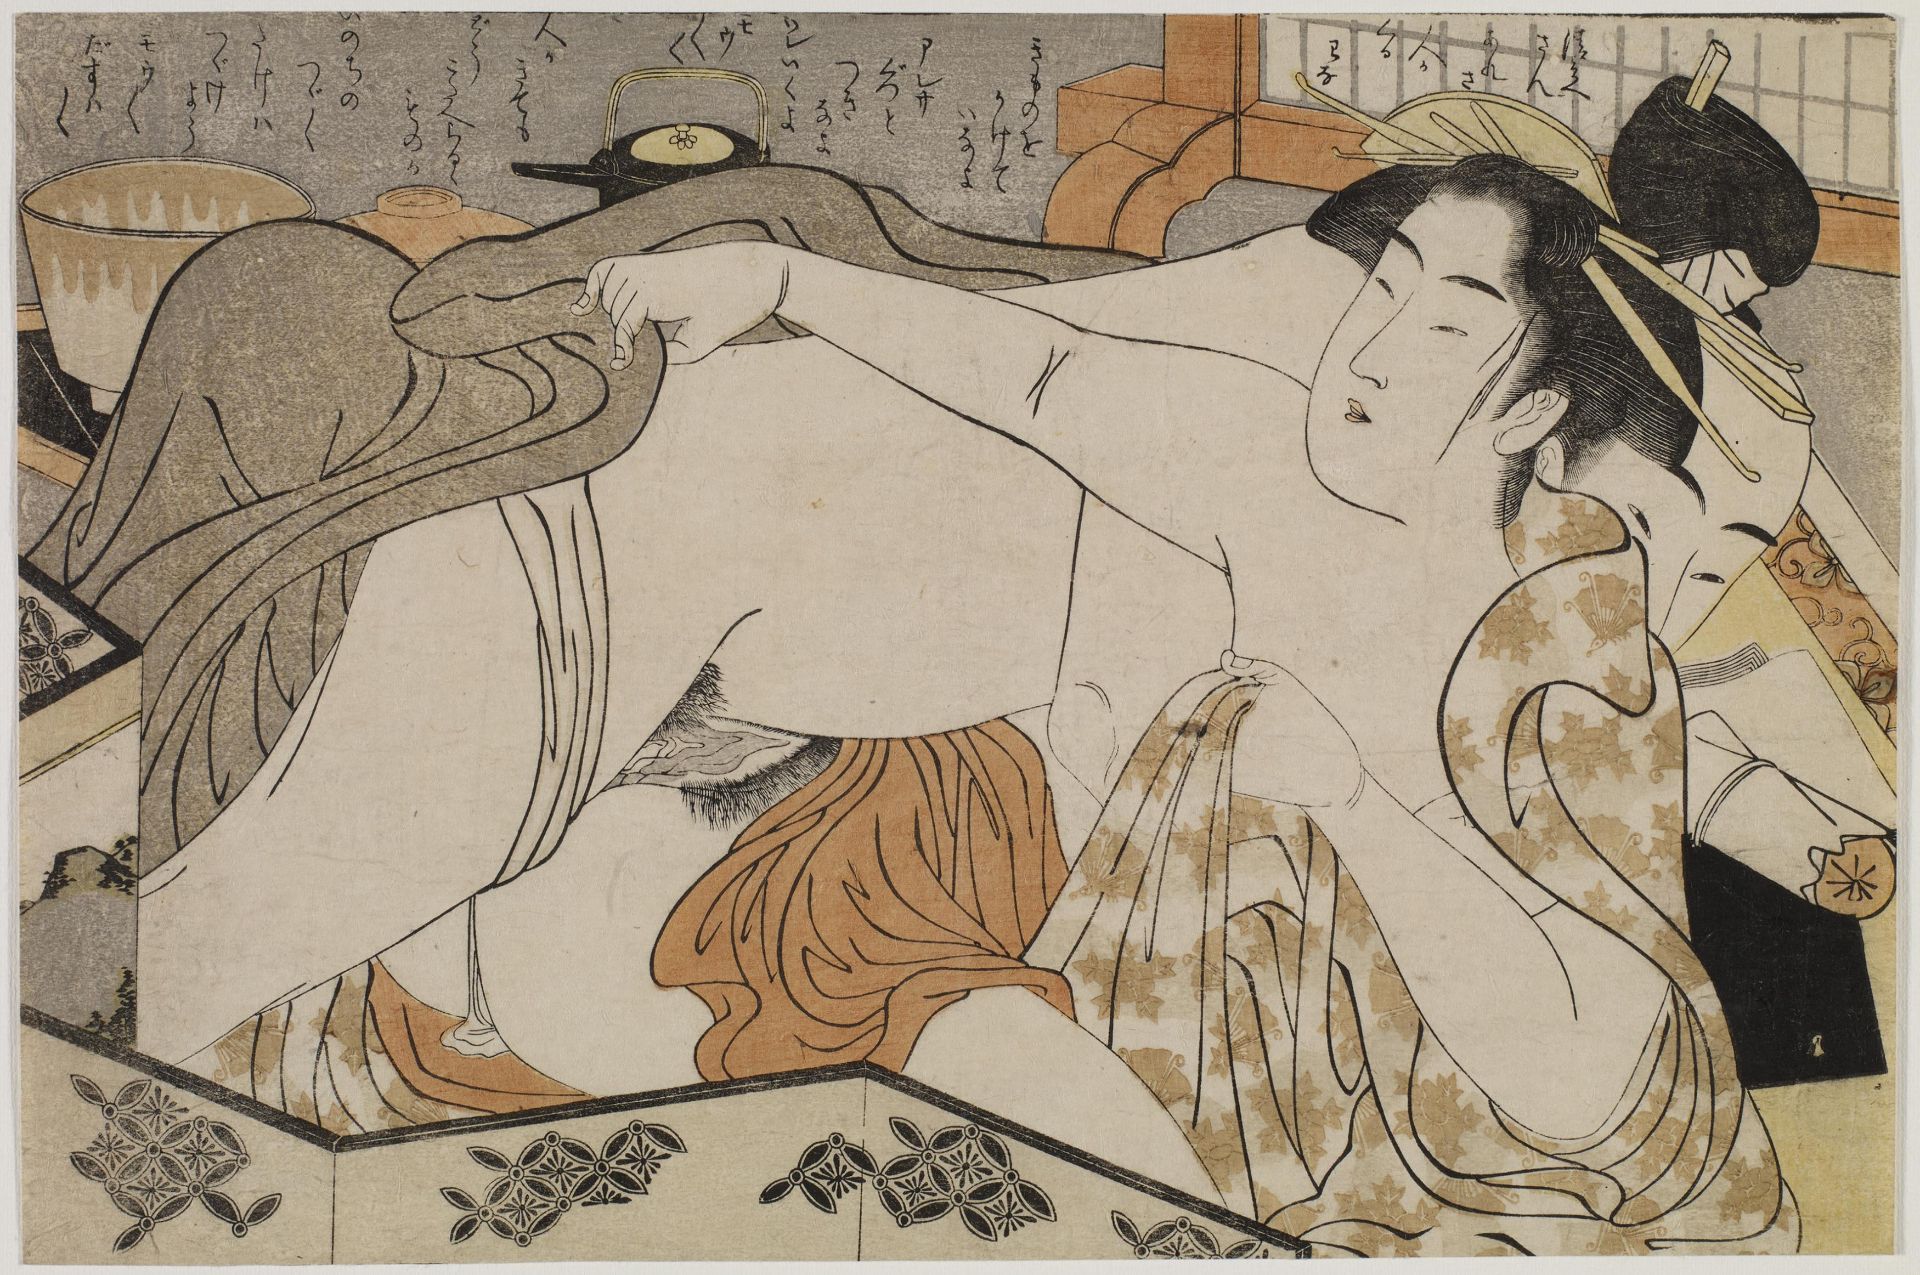 13 Blätter der Shunga-Serie "Fumi no kiyogaki" - Image 18 of 27